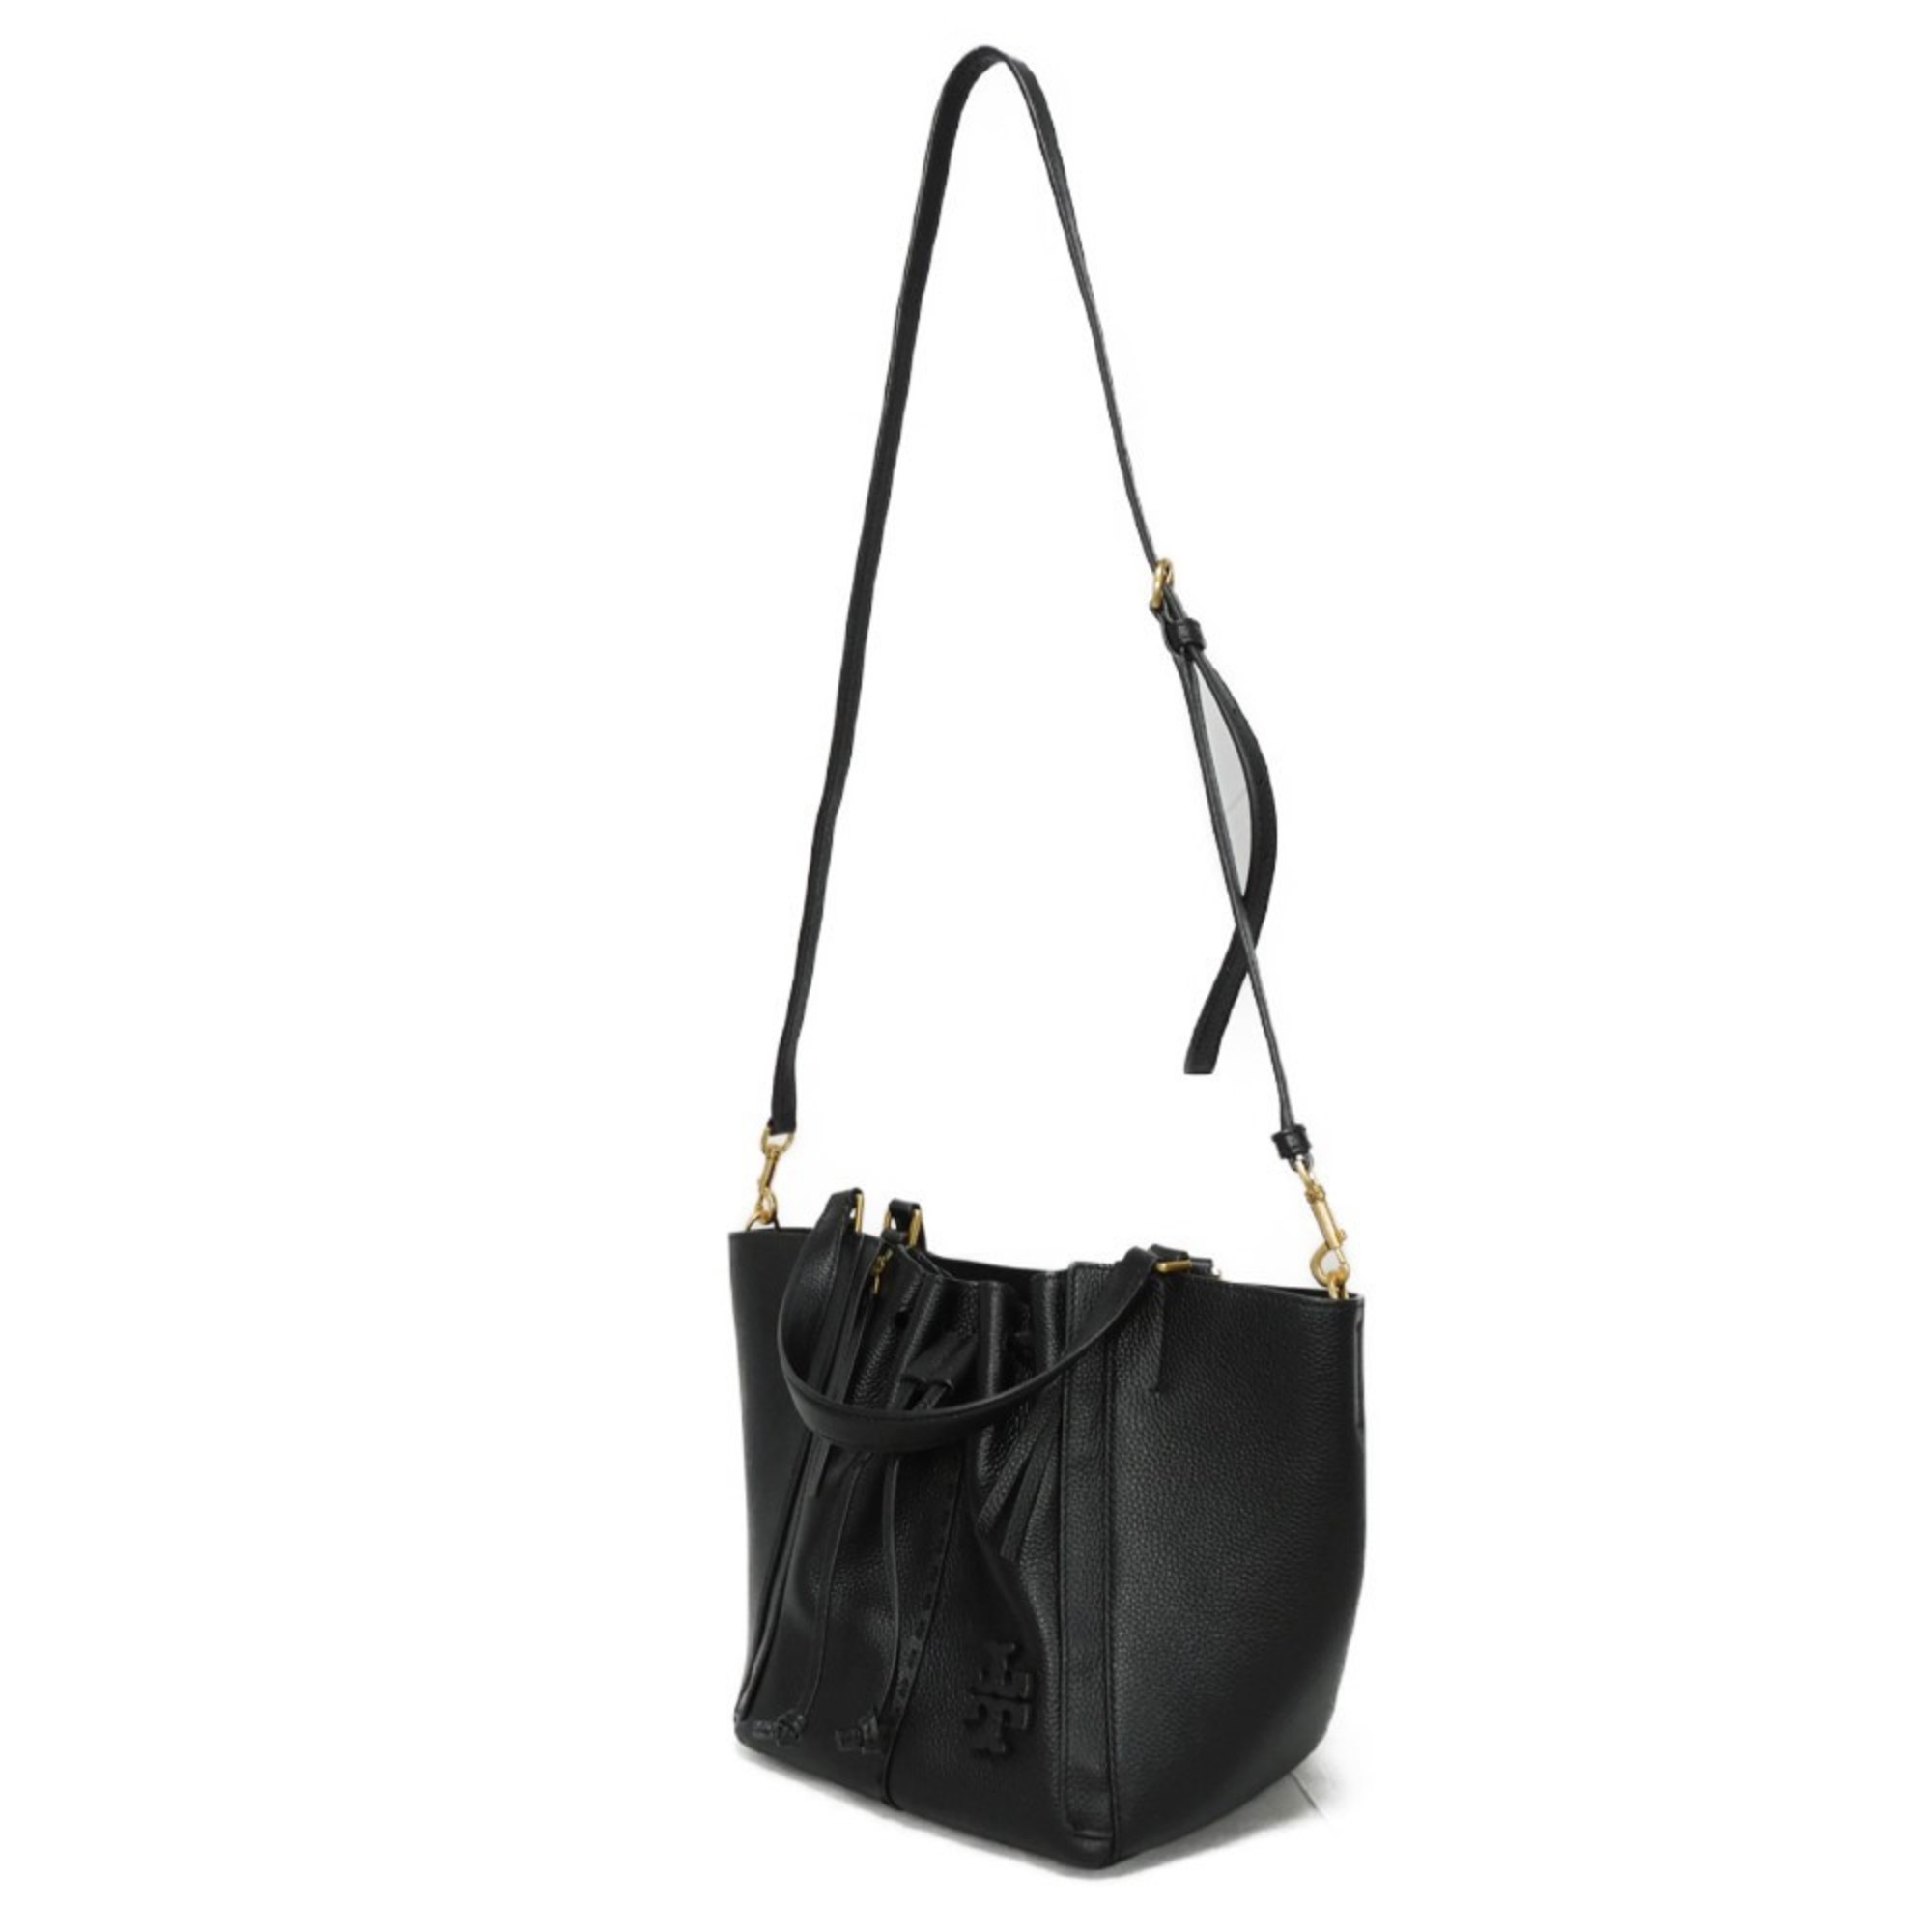 Tory Burch Handbag McGraw Dragonfly Drawstring Shoulder Bag Double T Black 88215 Women's